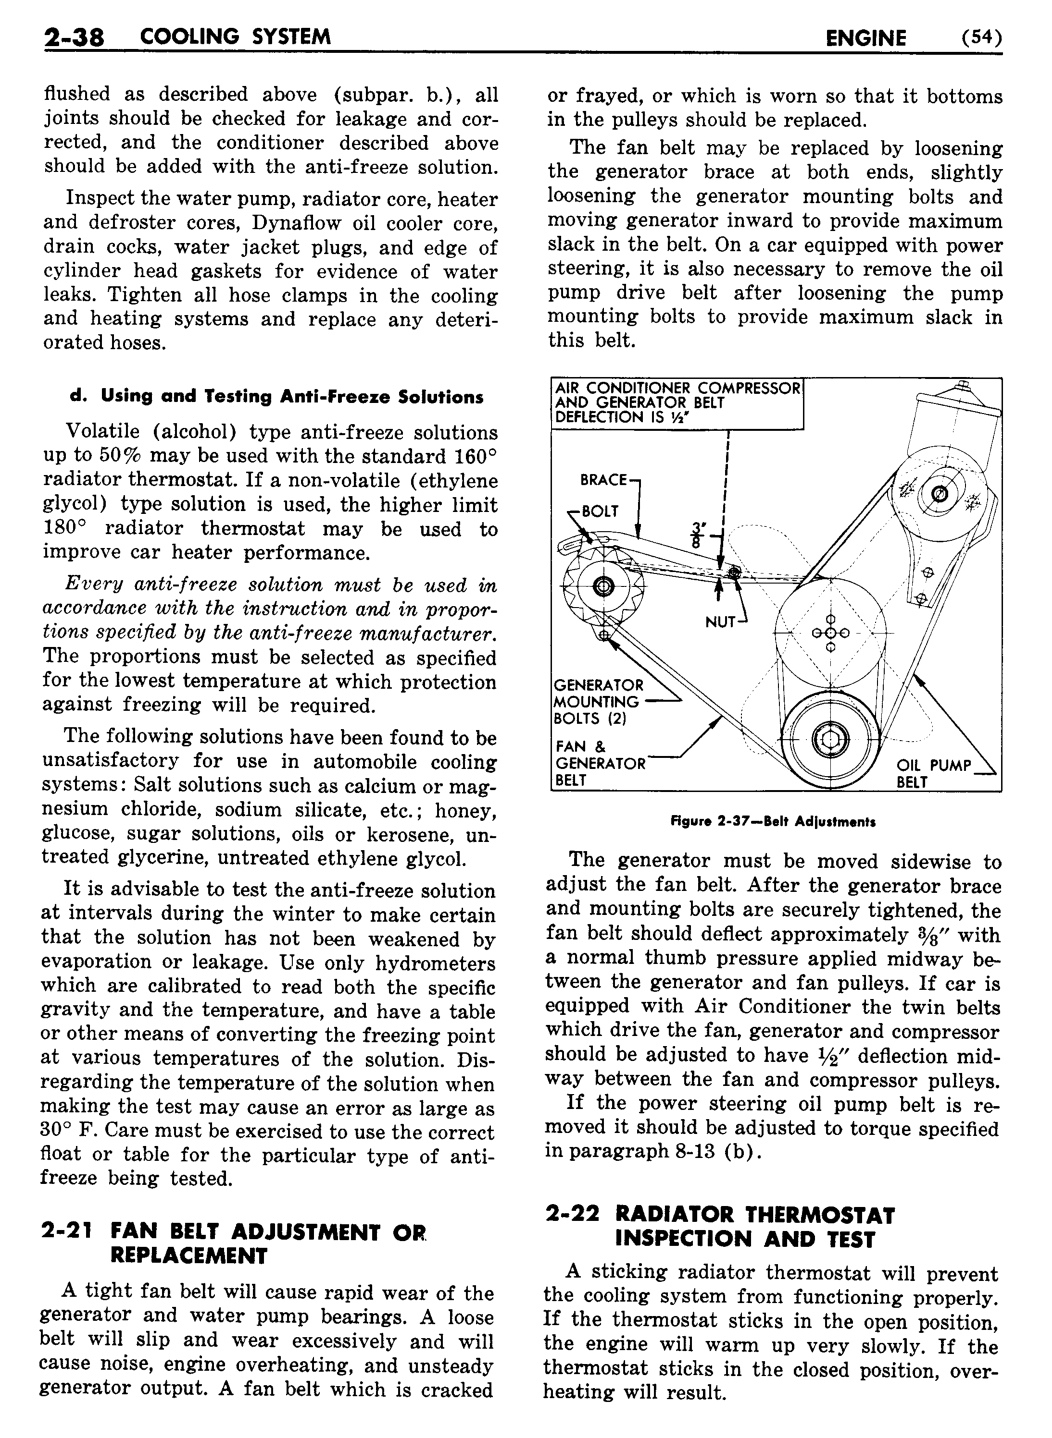 n_03 1955 Buick Shop Manual - Engine-038-038.jpg